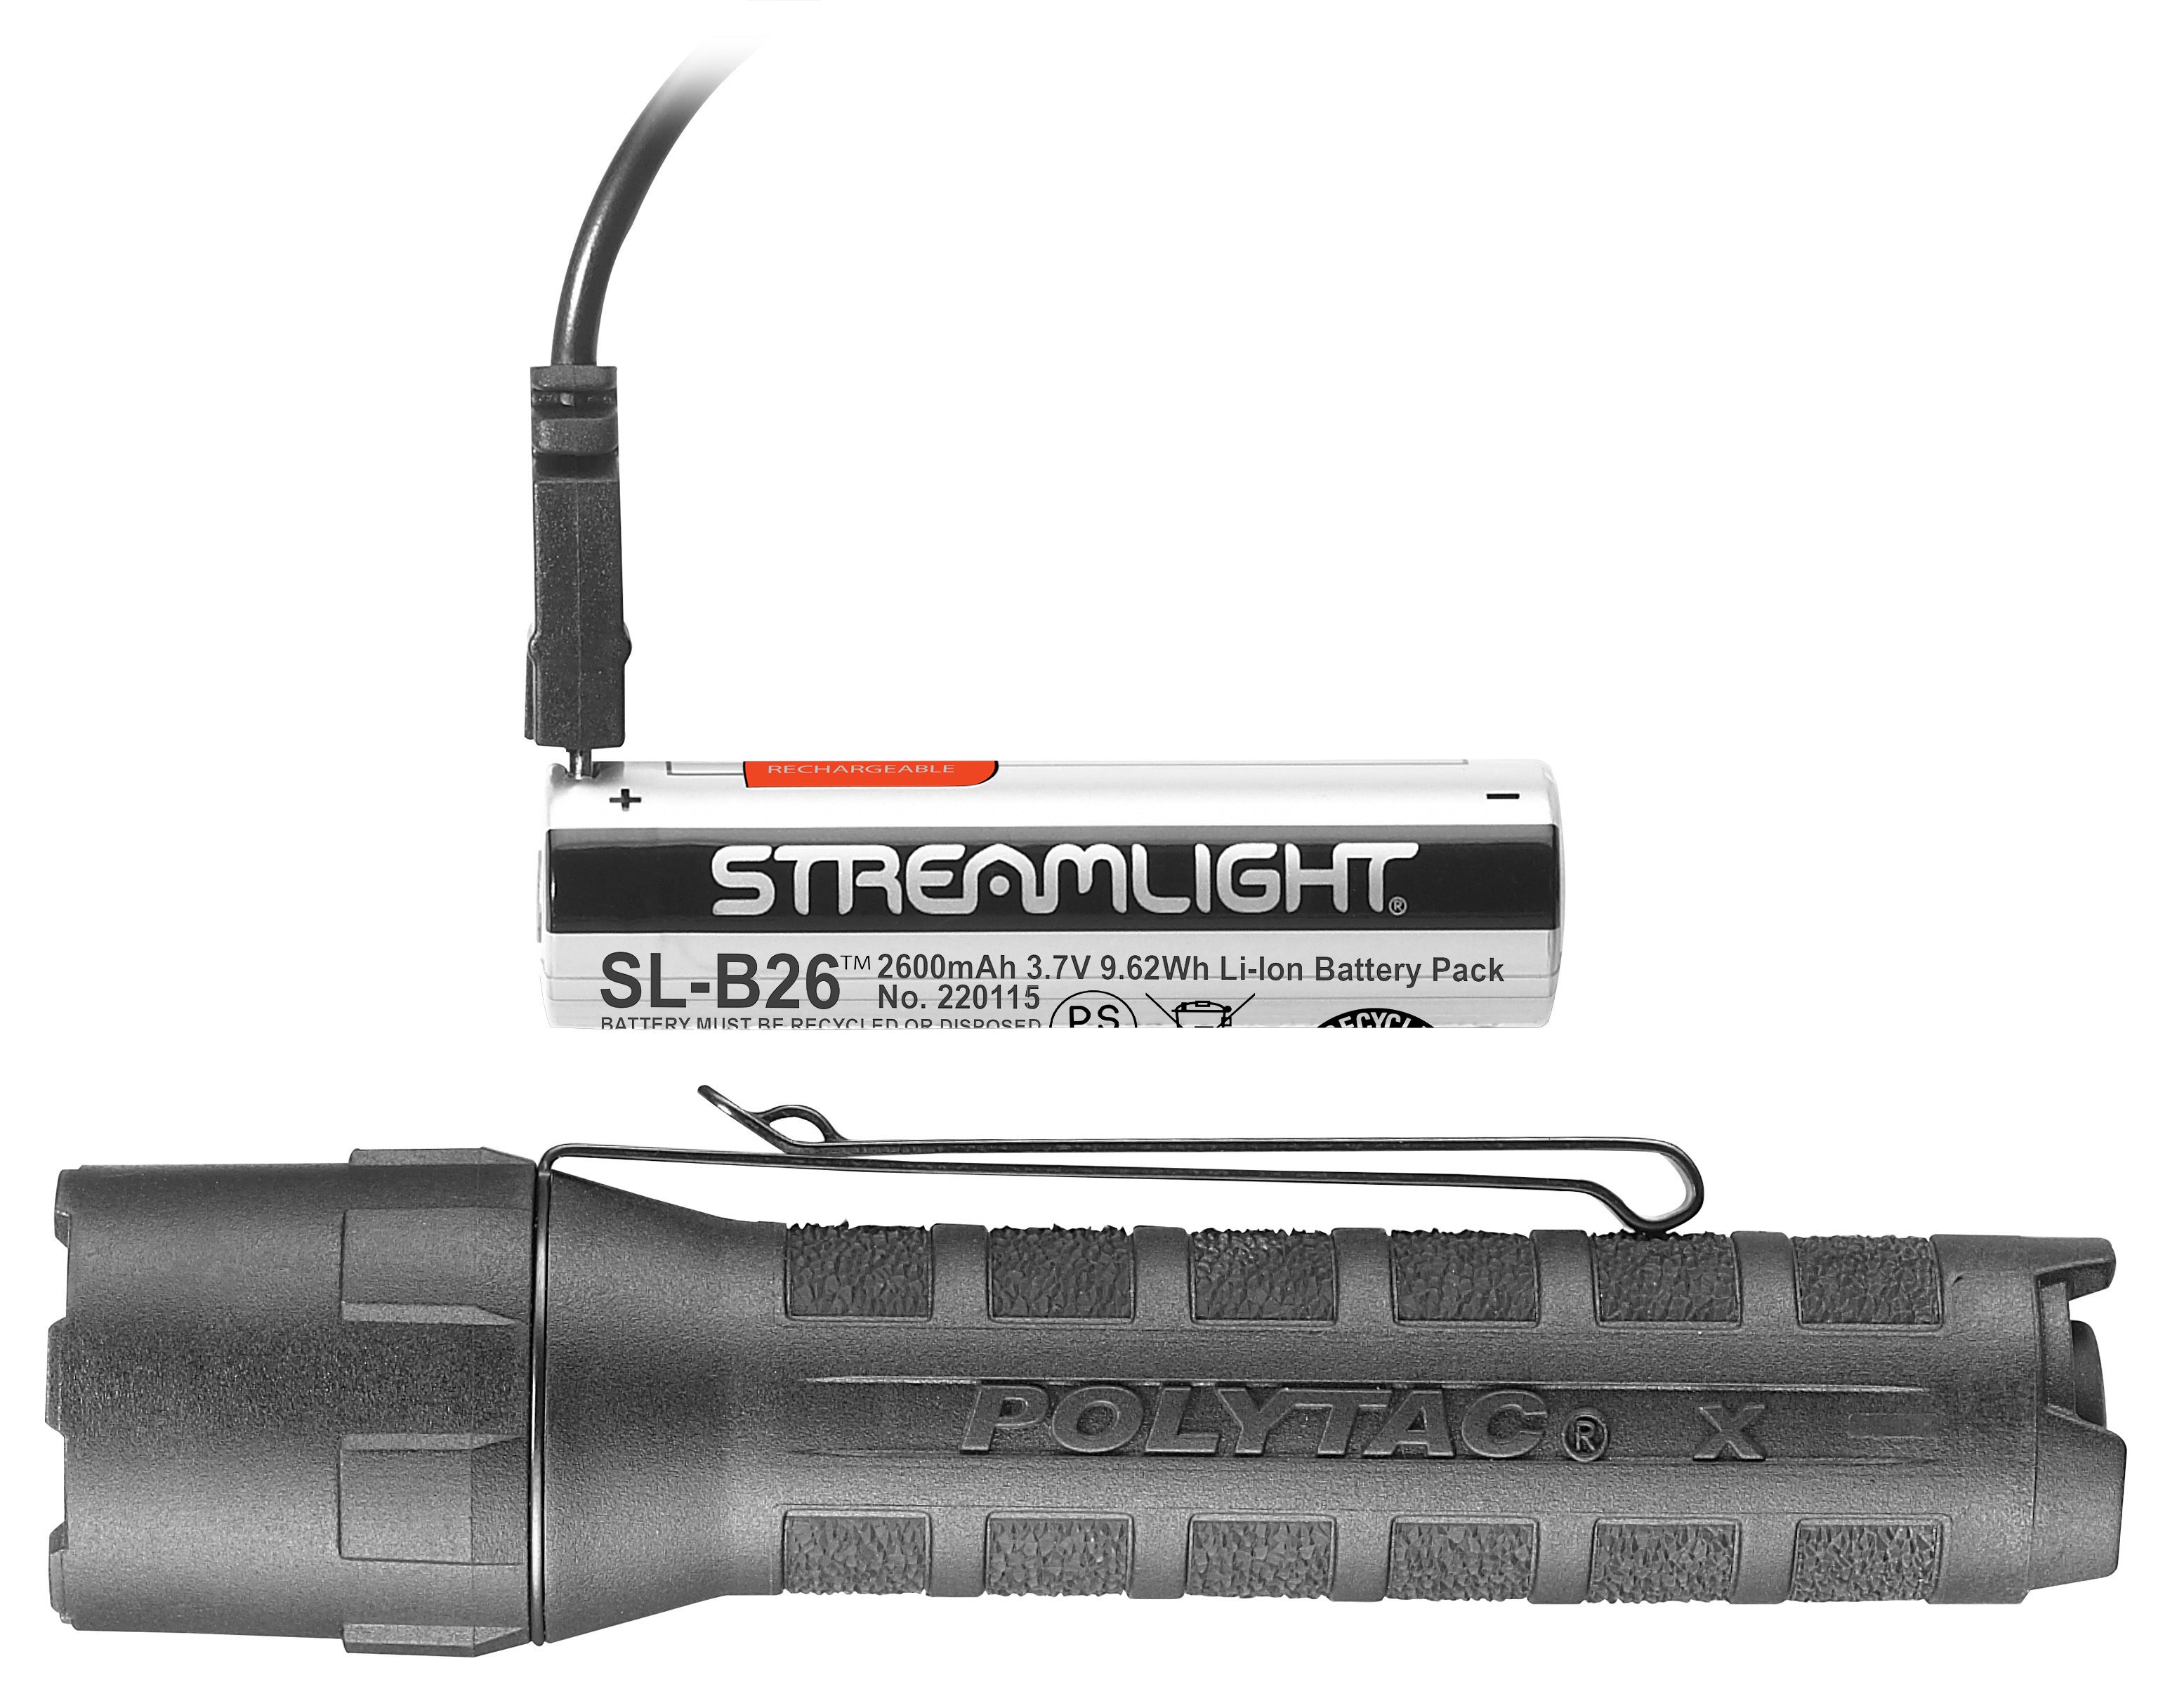 Streamlight - POLYTAC® X USBPOLYTAC® X FLASHLIGHT